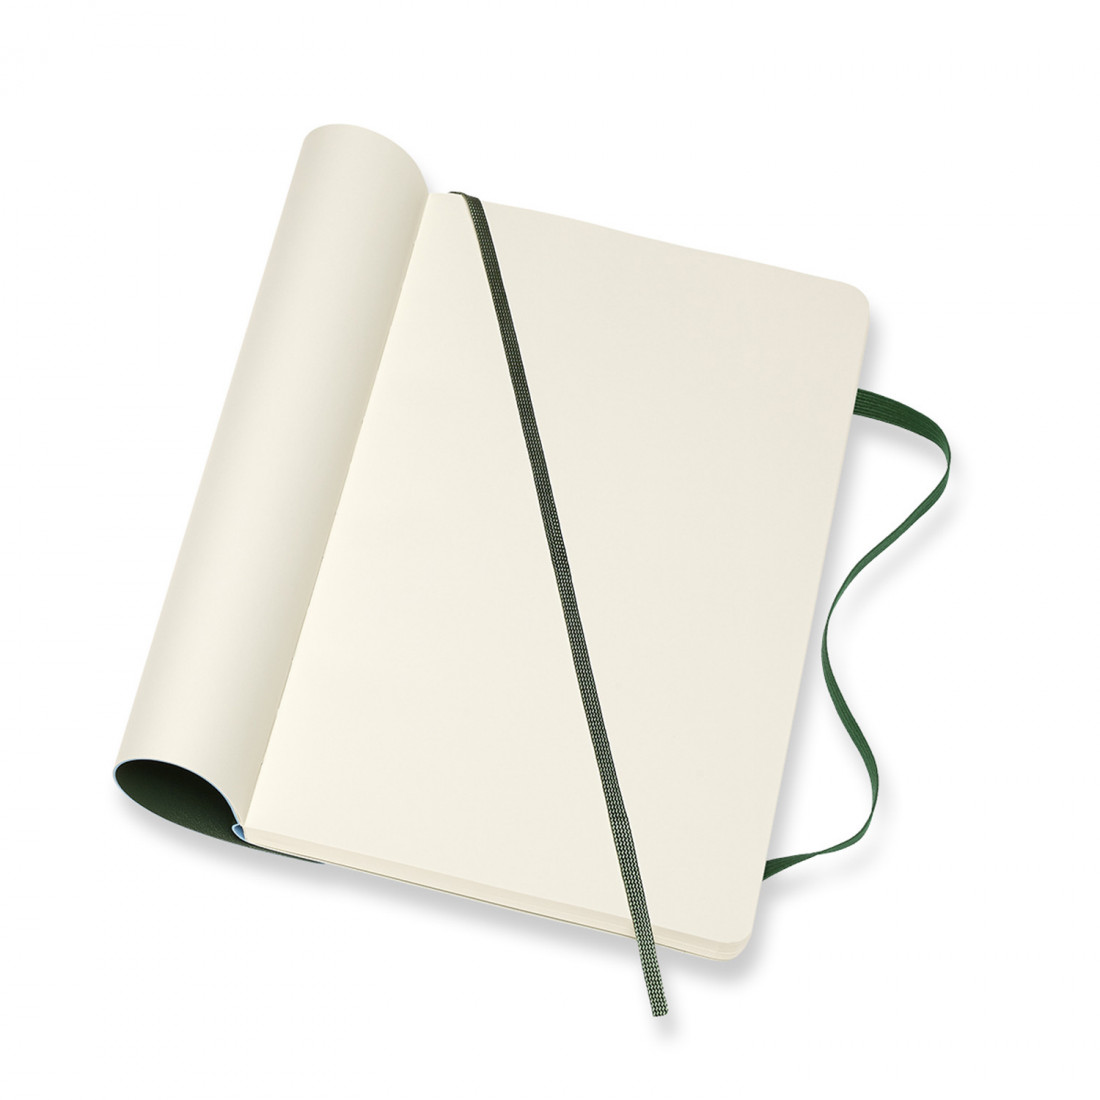 Notebook Large 13x21 Plain Myrtle Green Soft Cover Moleskine